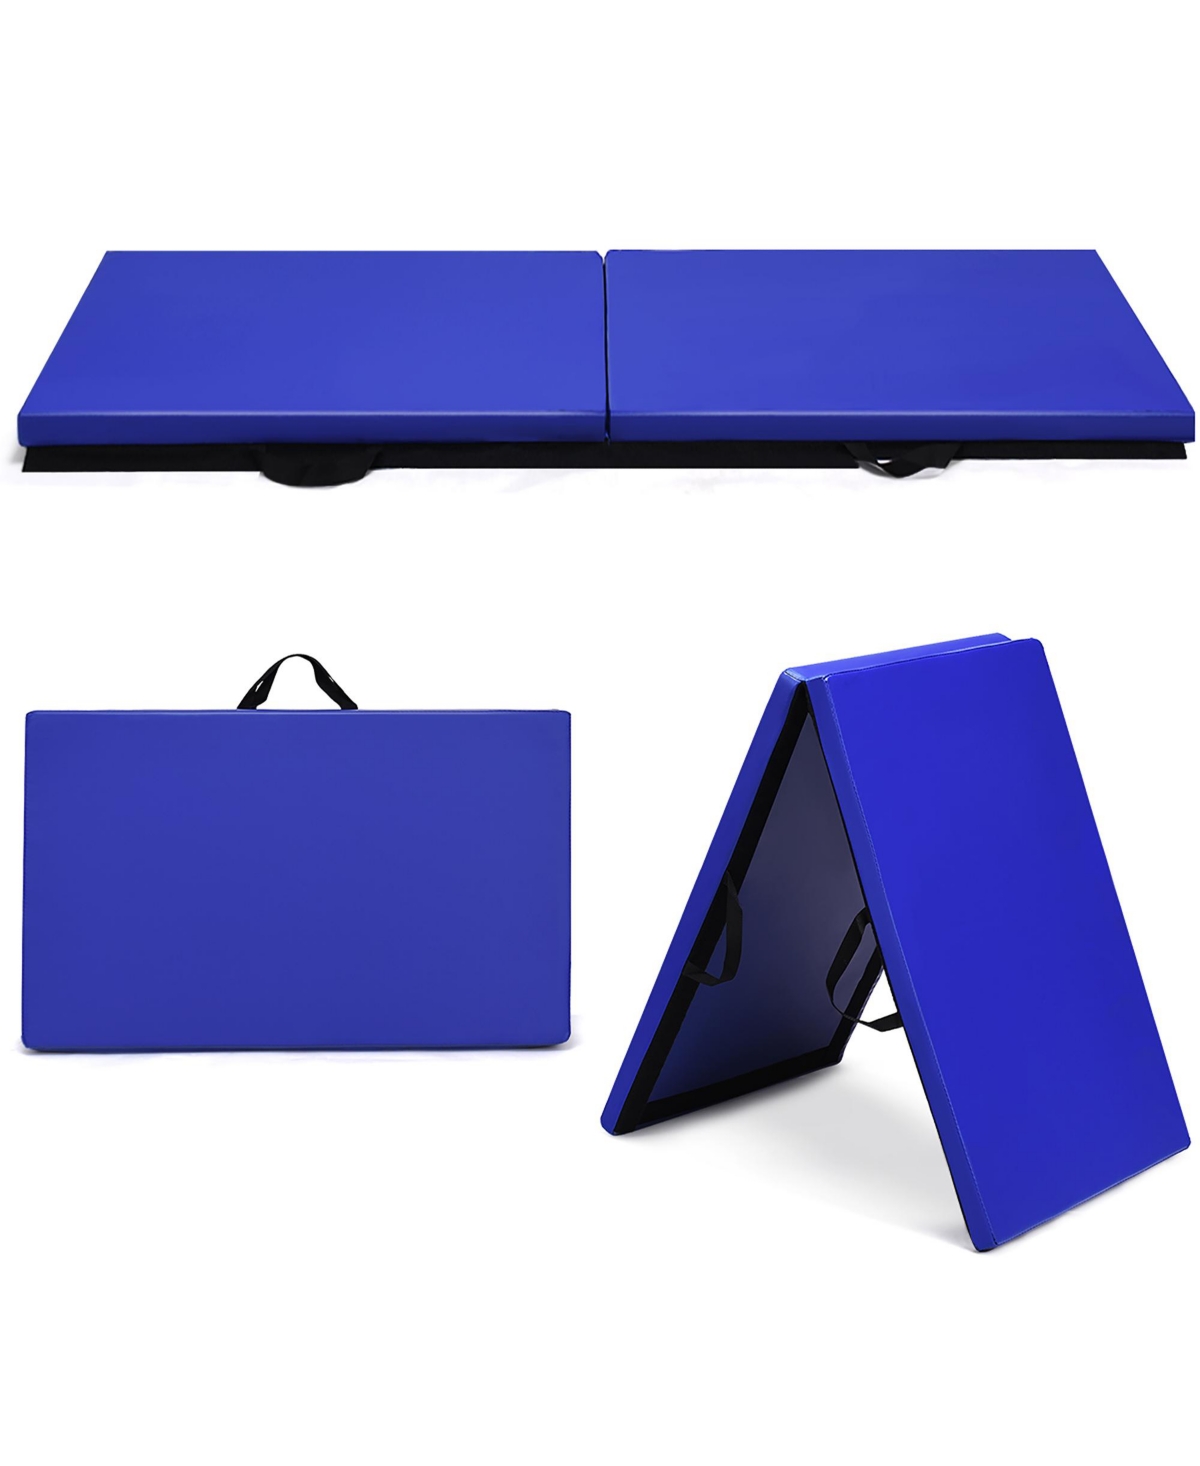 6'x2' Yoga Mat Folding Exercise Aerobics Stretch Gymnastic - Blue